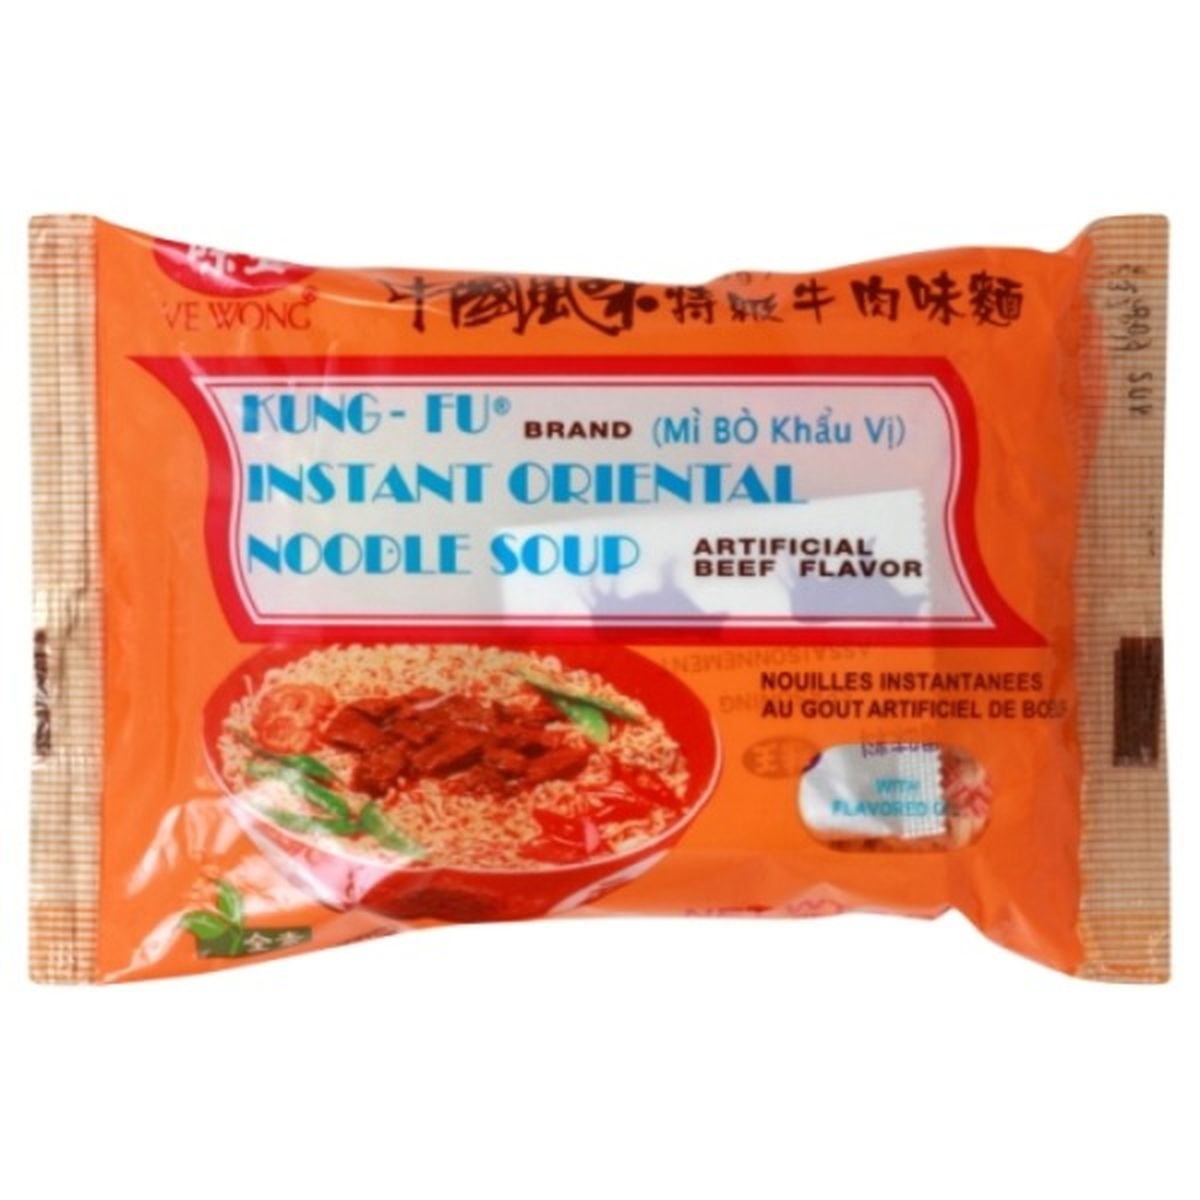 Calories in Kung Fu Soup, Instant, Oriental Noodle, Artificial Beef Flavor